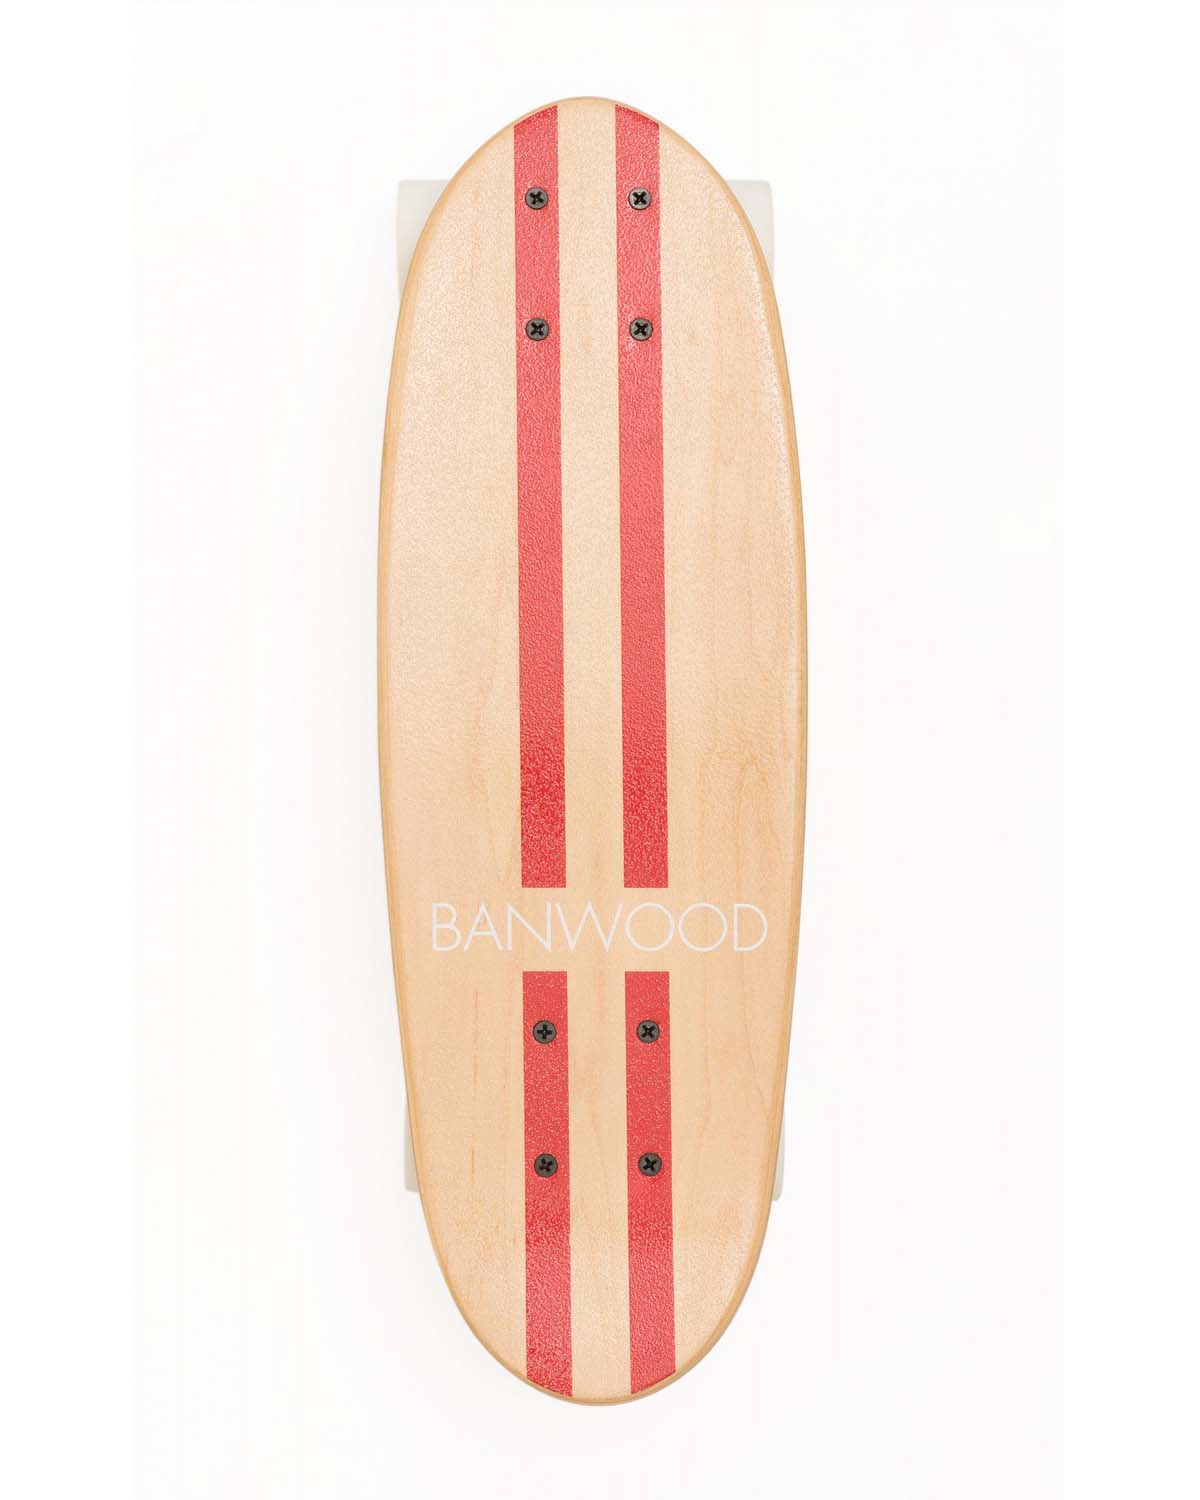 Little banwood play banwood skateboard in red